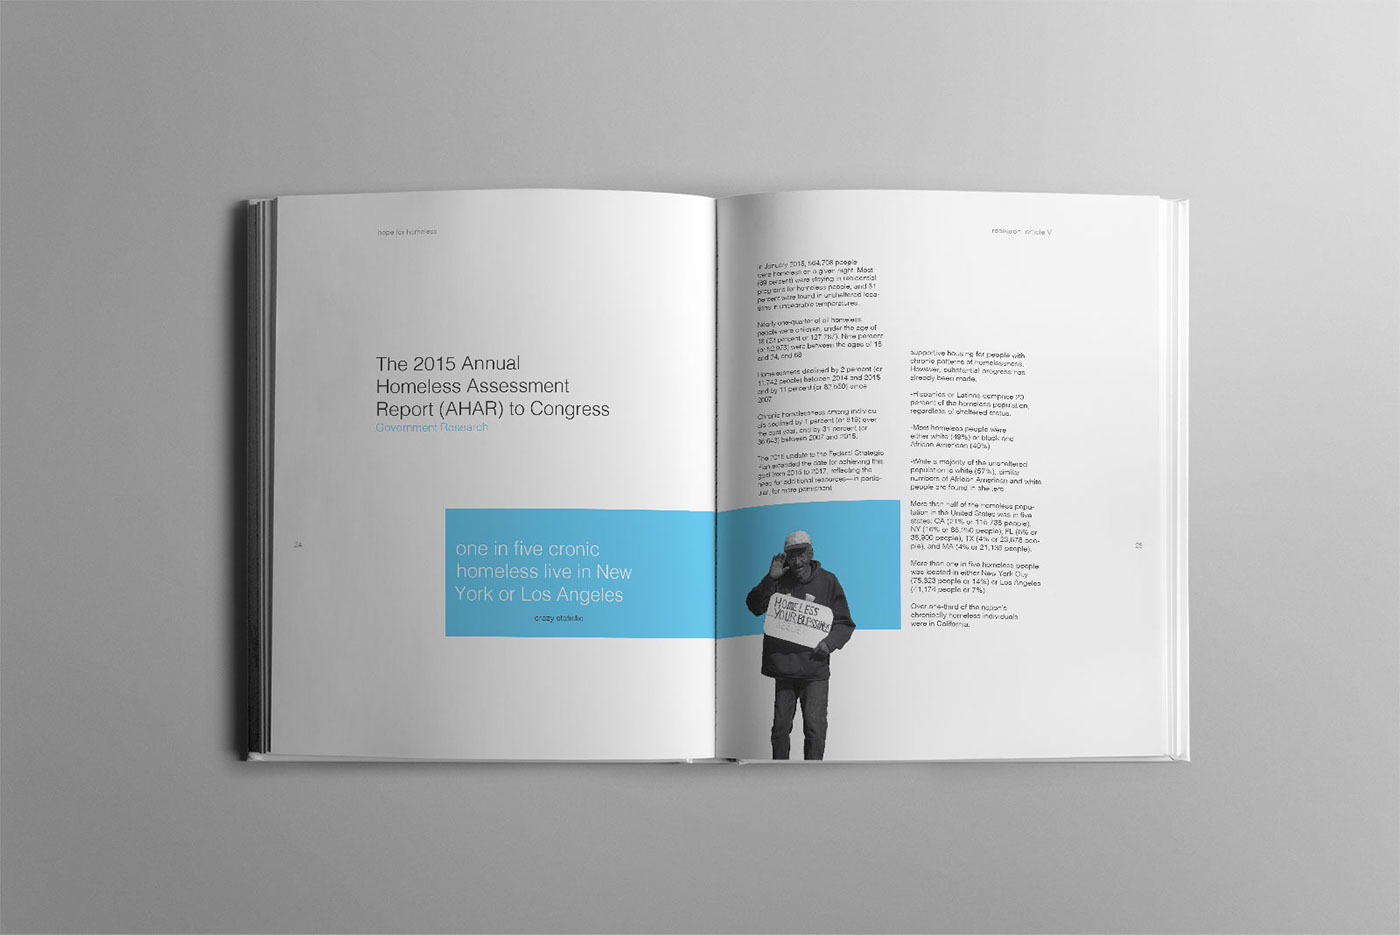 homeless hope for homeless book design book Layout Design research book ASU